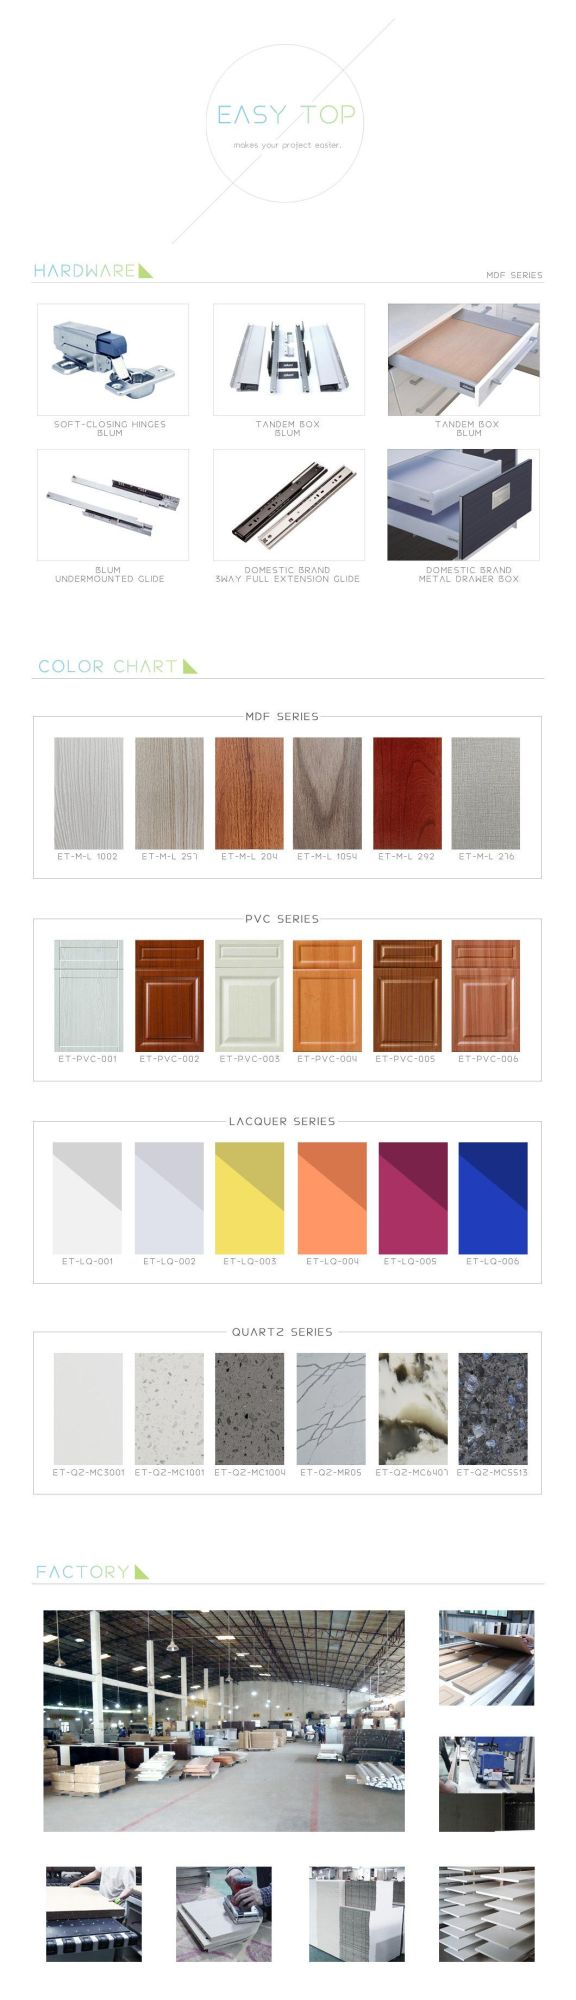 Modular Design MDF Door Panel Affordable Price Home Blue Wood Matt Surface Furniture Design Kitchen Cabinet